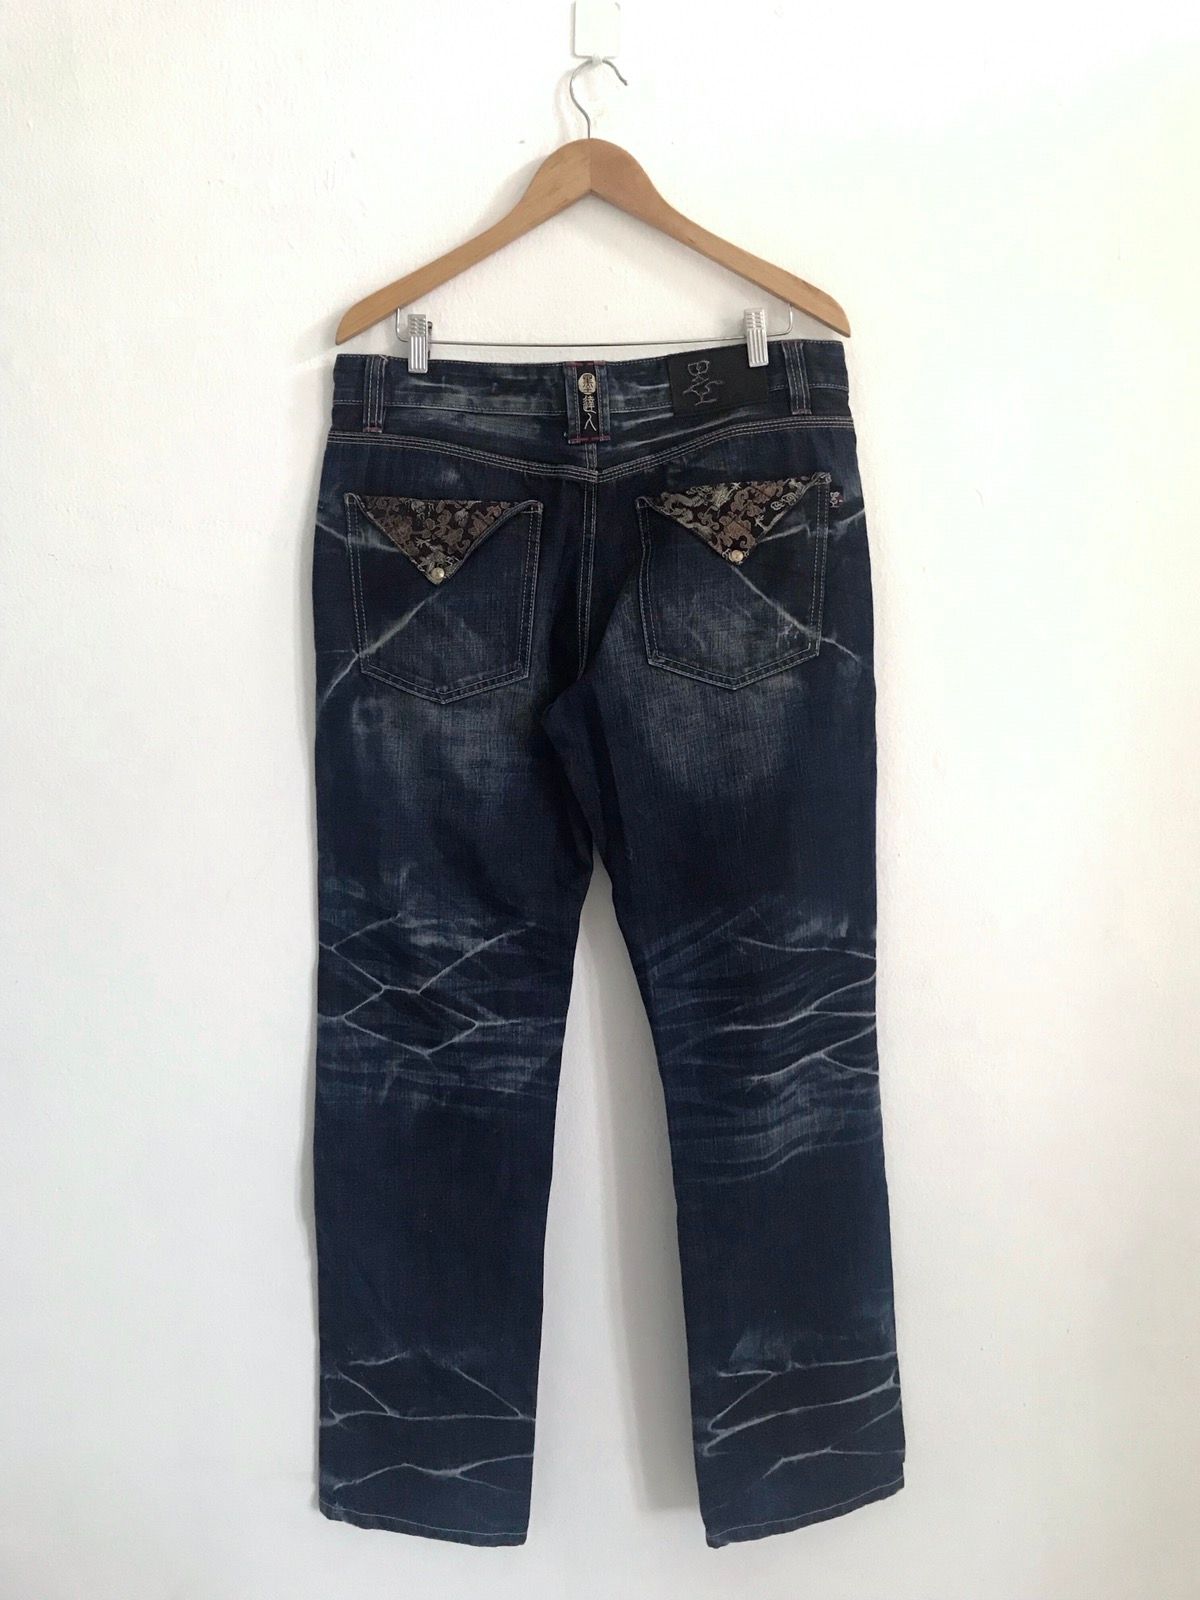 Japanese Brand Osaka Big Distressed Jeans | Grailed